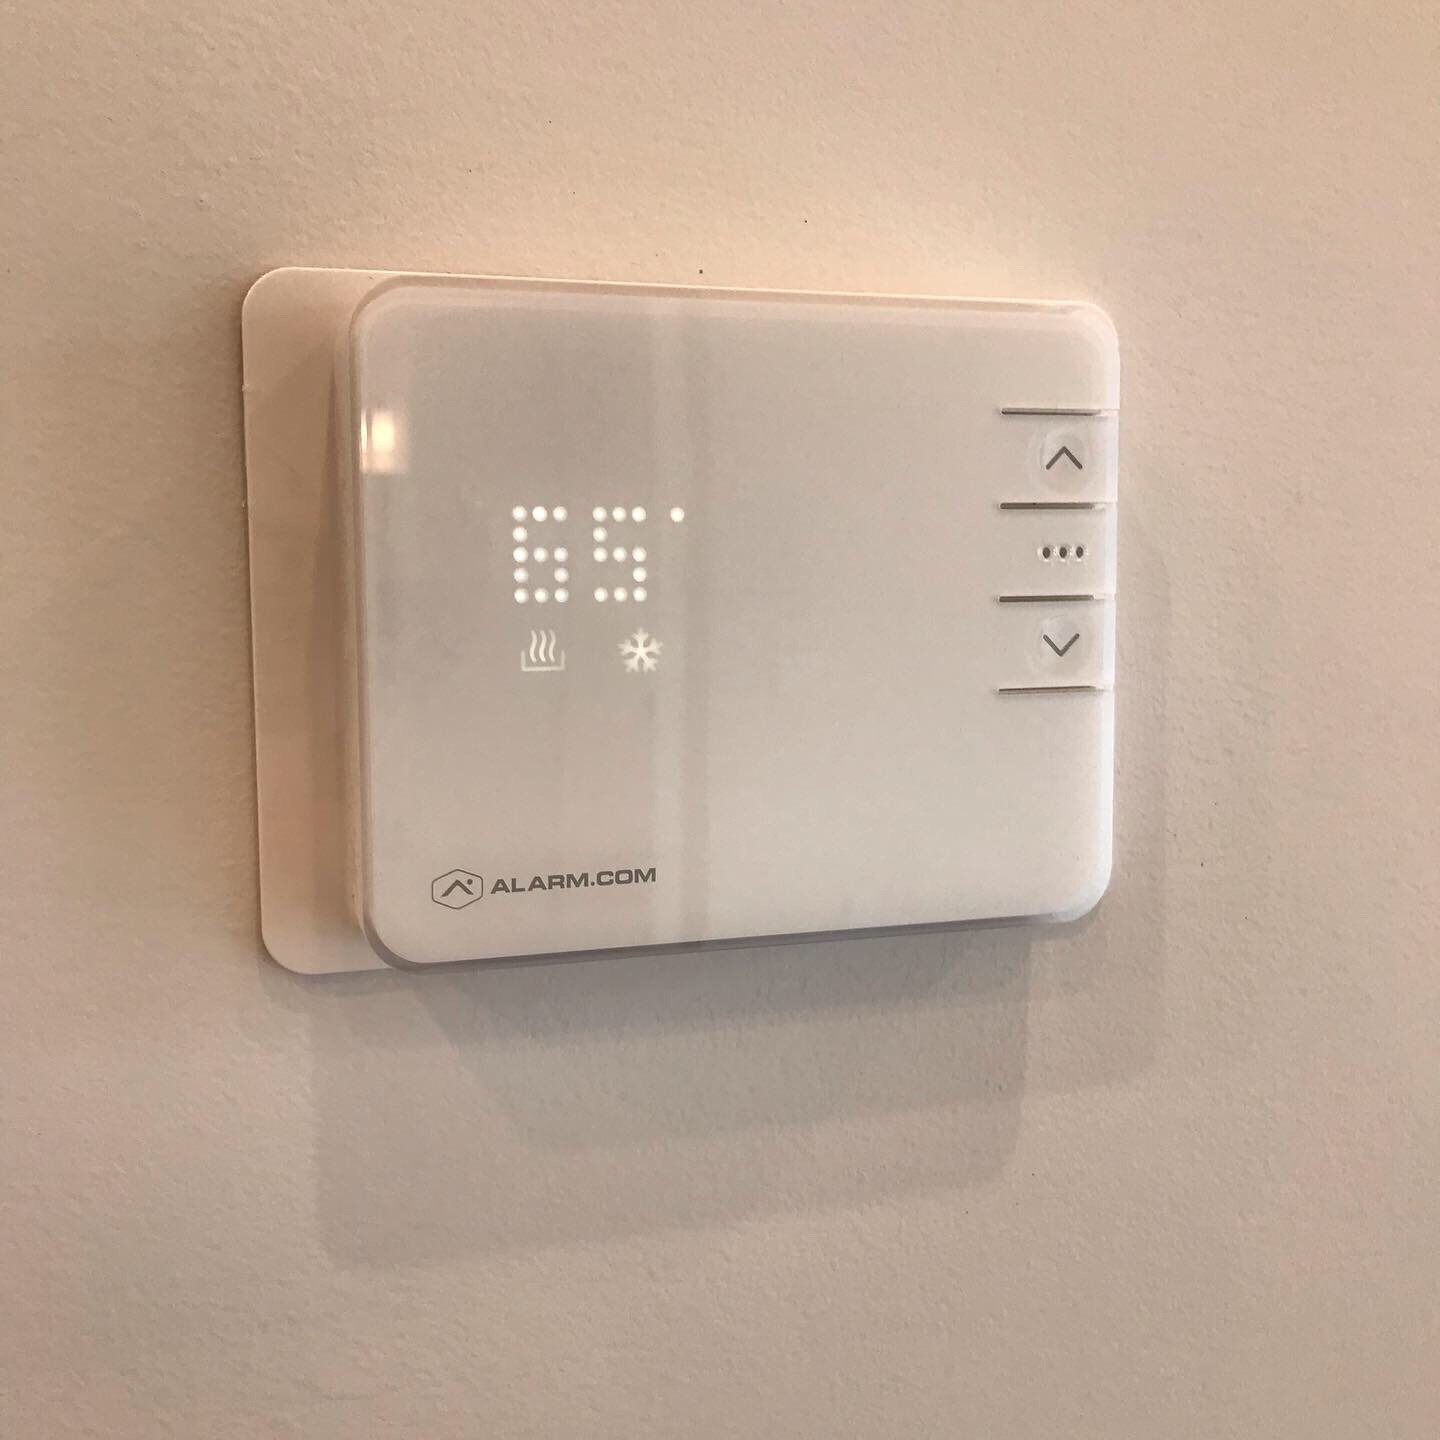 thermostat.JPG